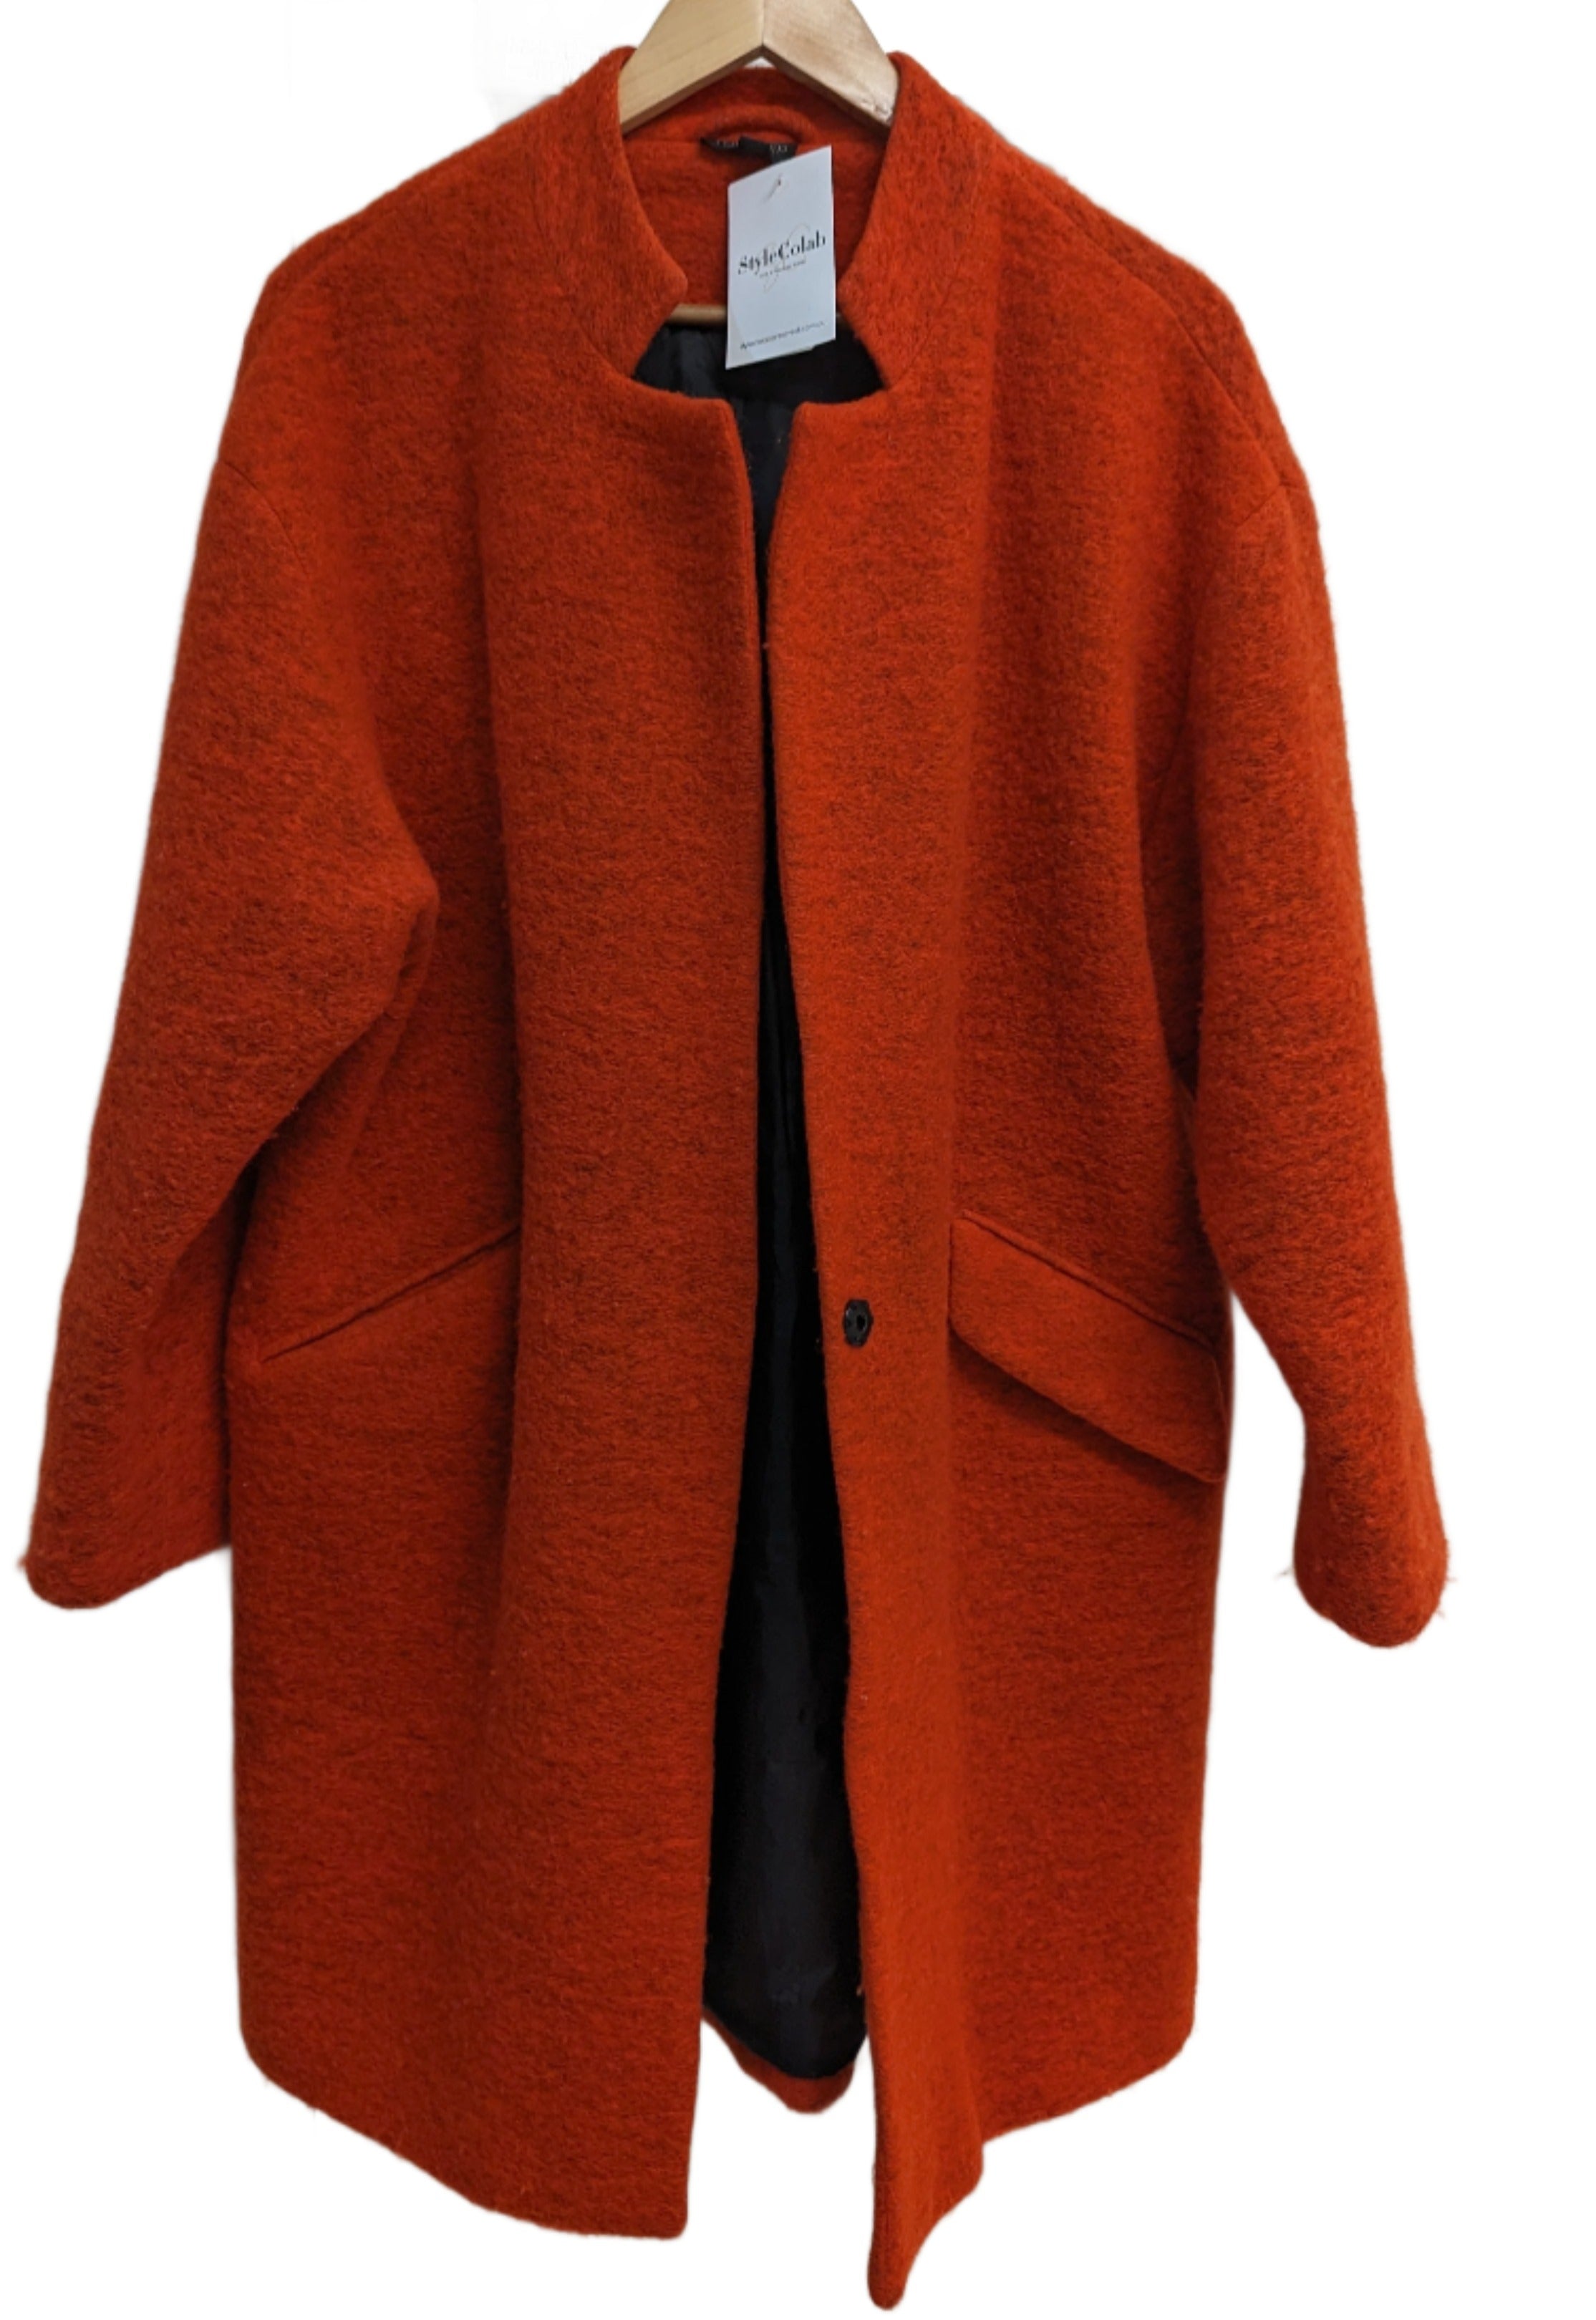 Topshop Orange Coat